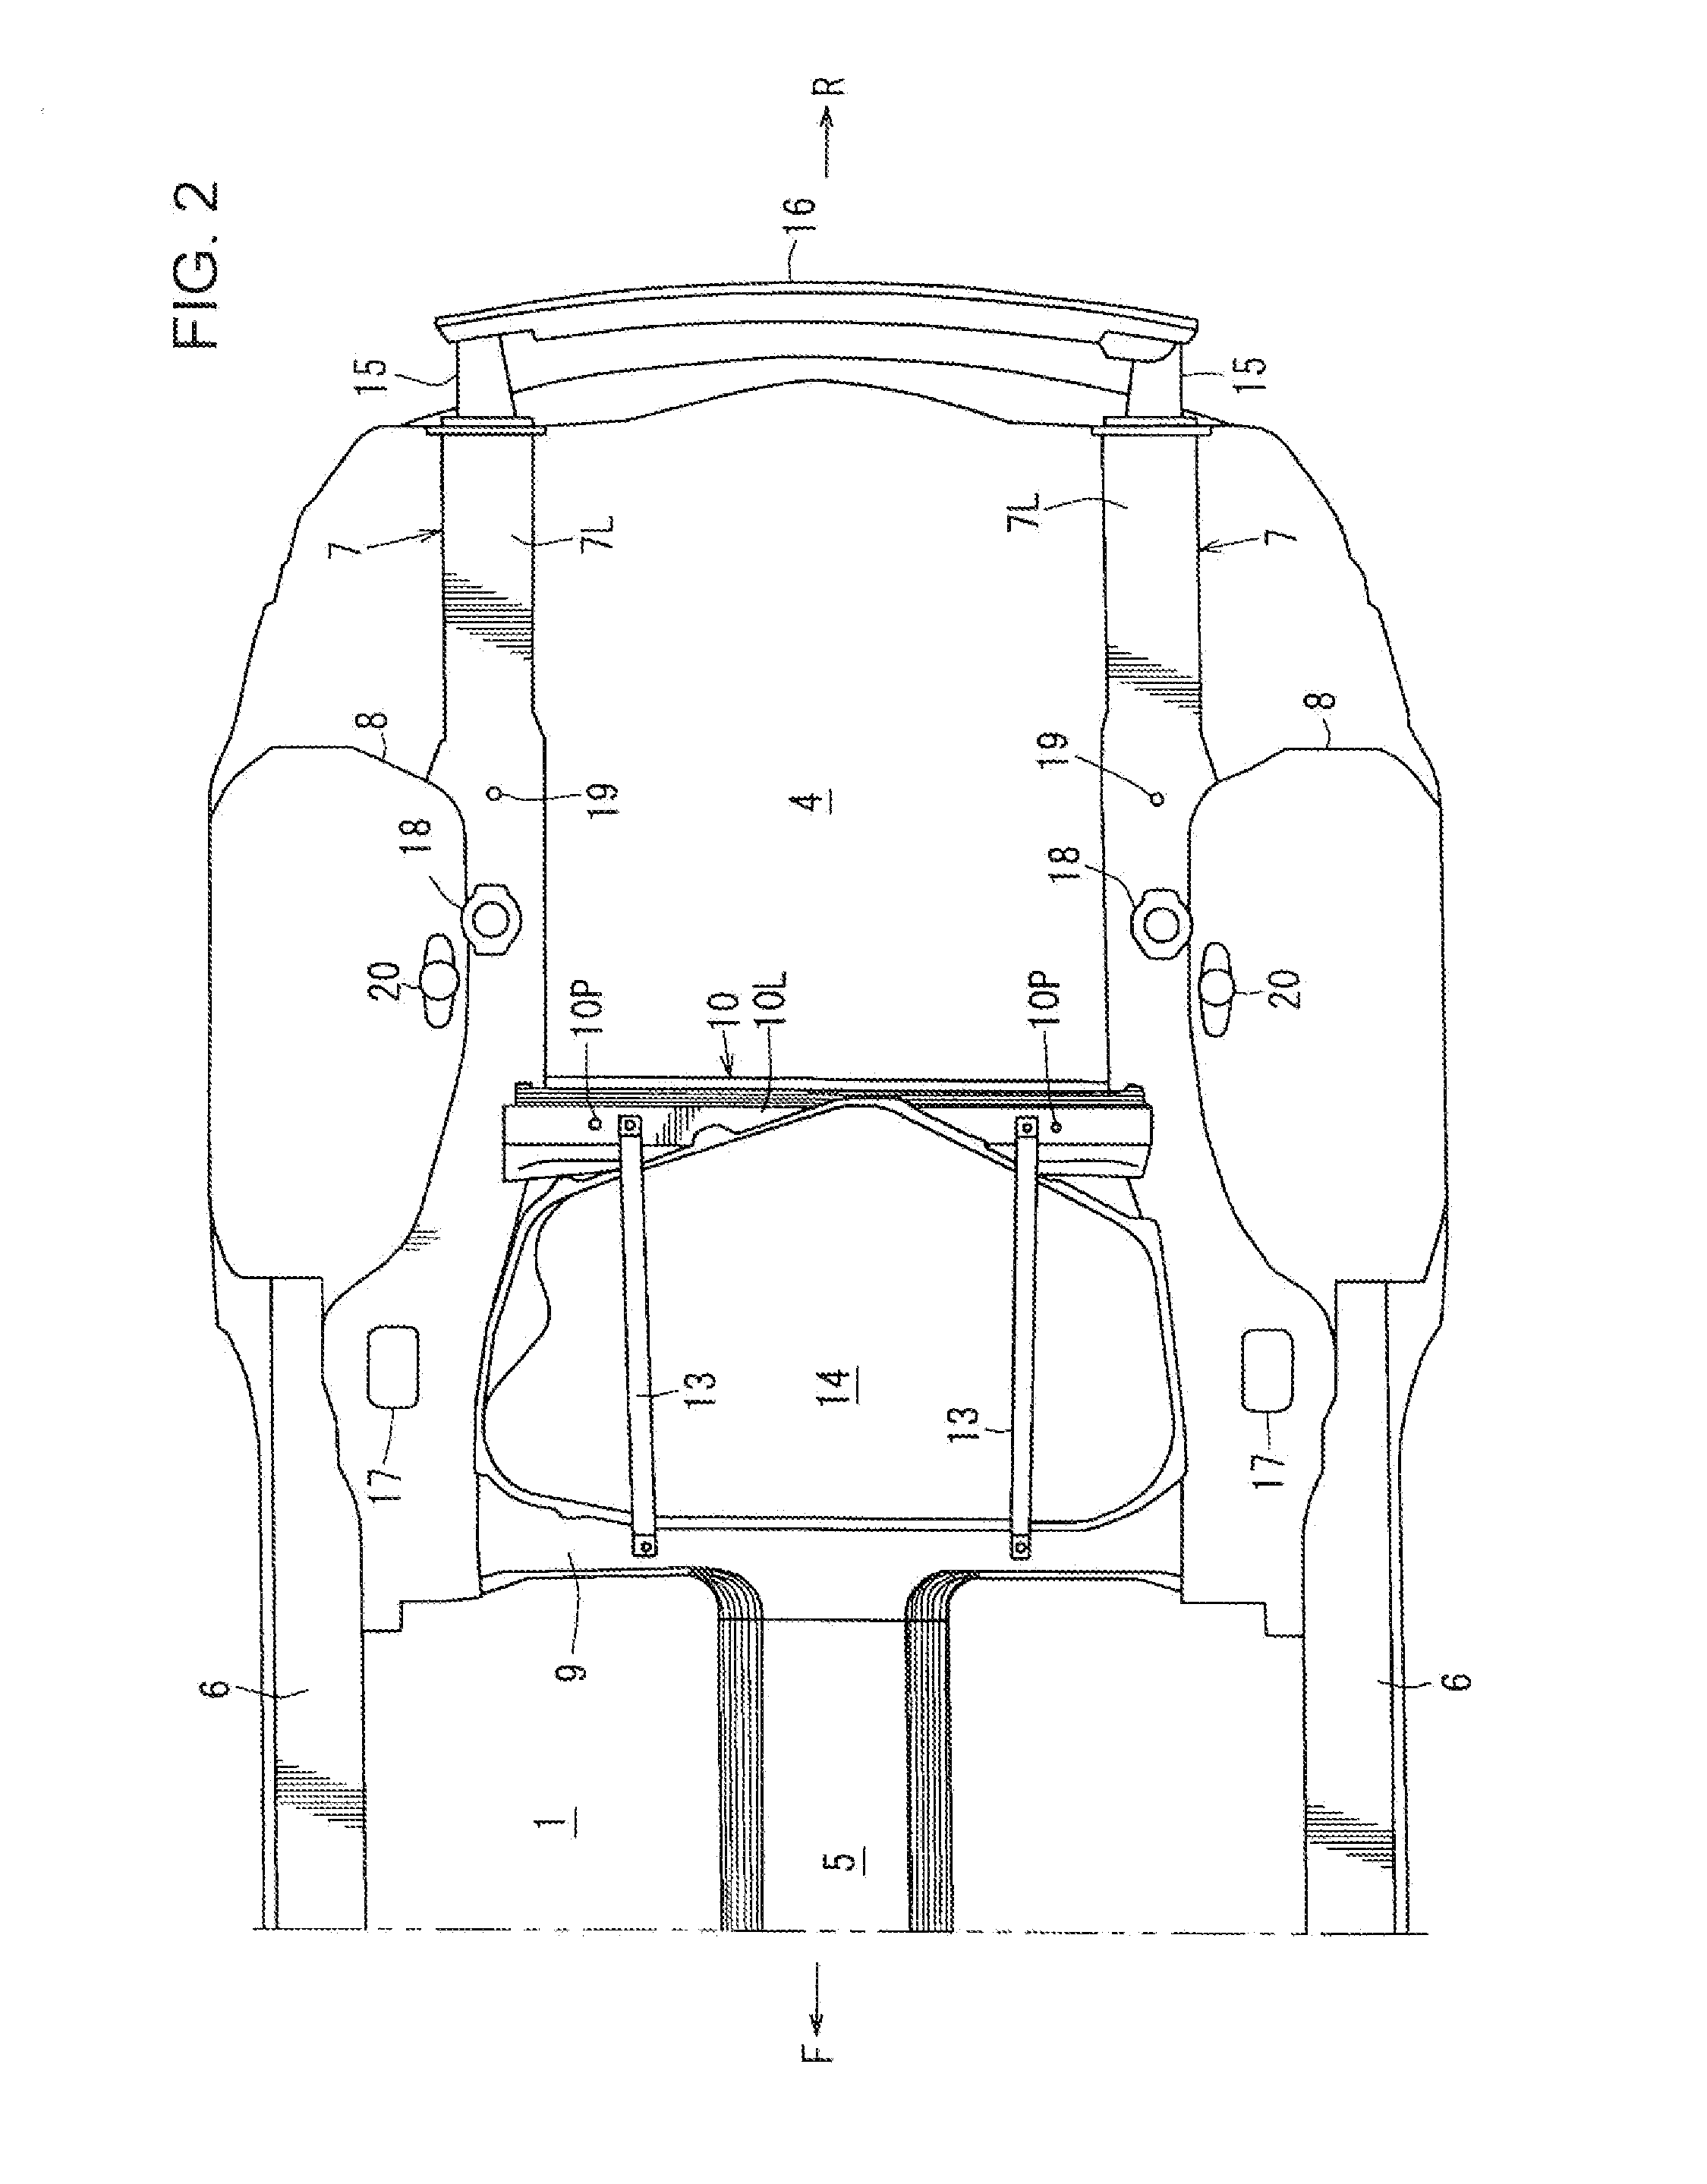 Automotive rear vehicle body structure